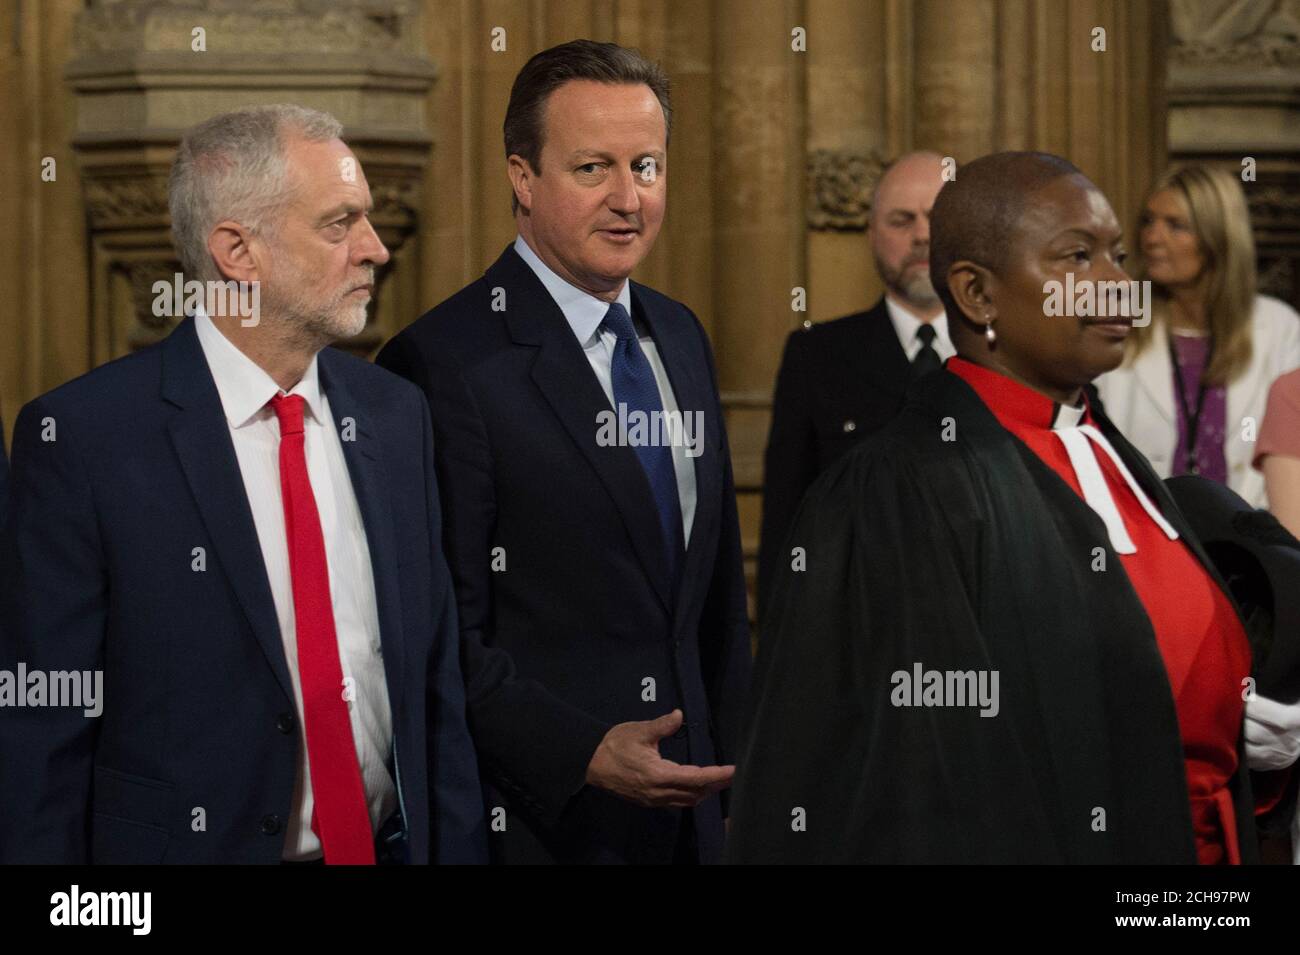 Premierminister David Cameron und Labour-Chef Jeremy Corbyn passieren die Central Lobby die Eröffnung des Parlaments im Londoner Palace of Westminster. Stockfoto